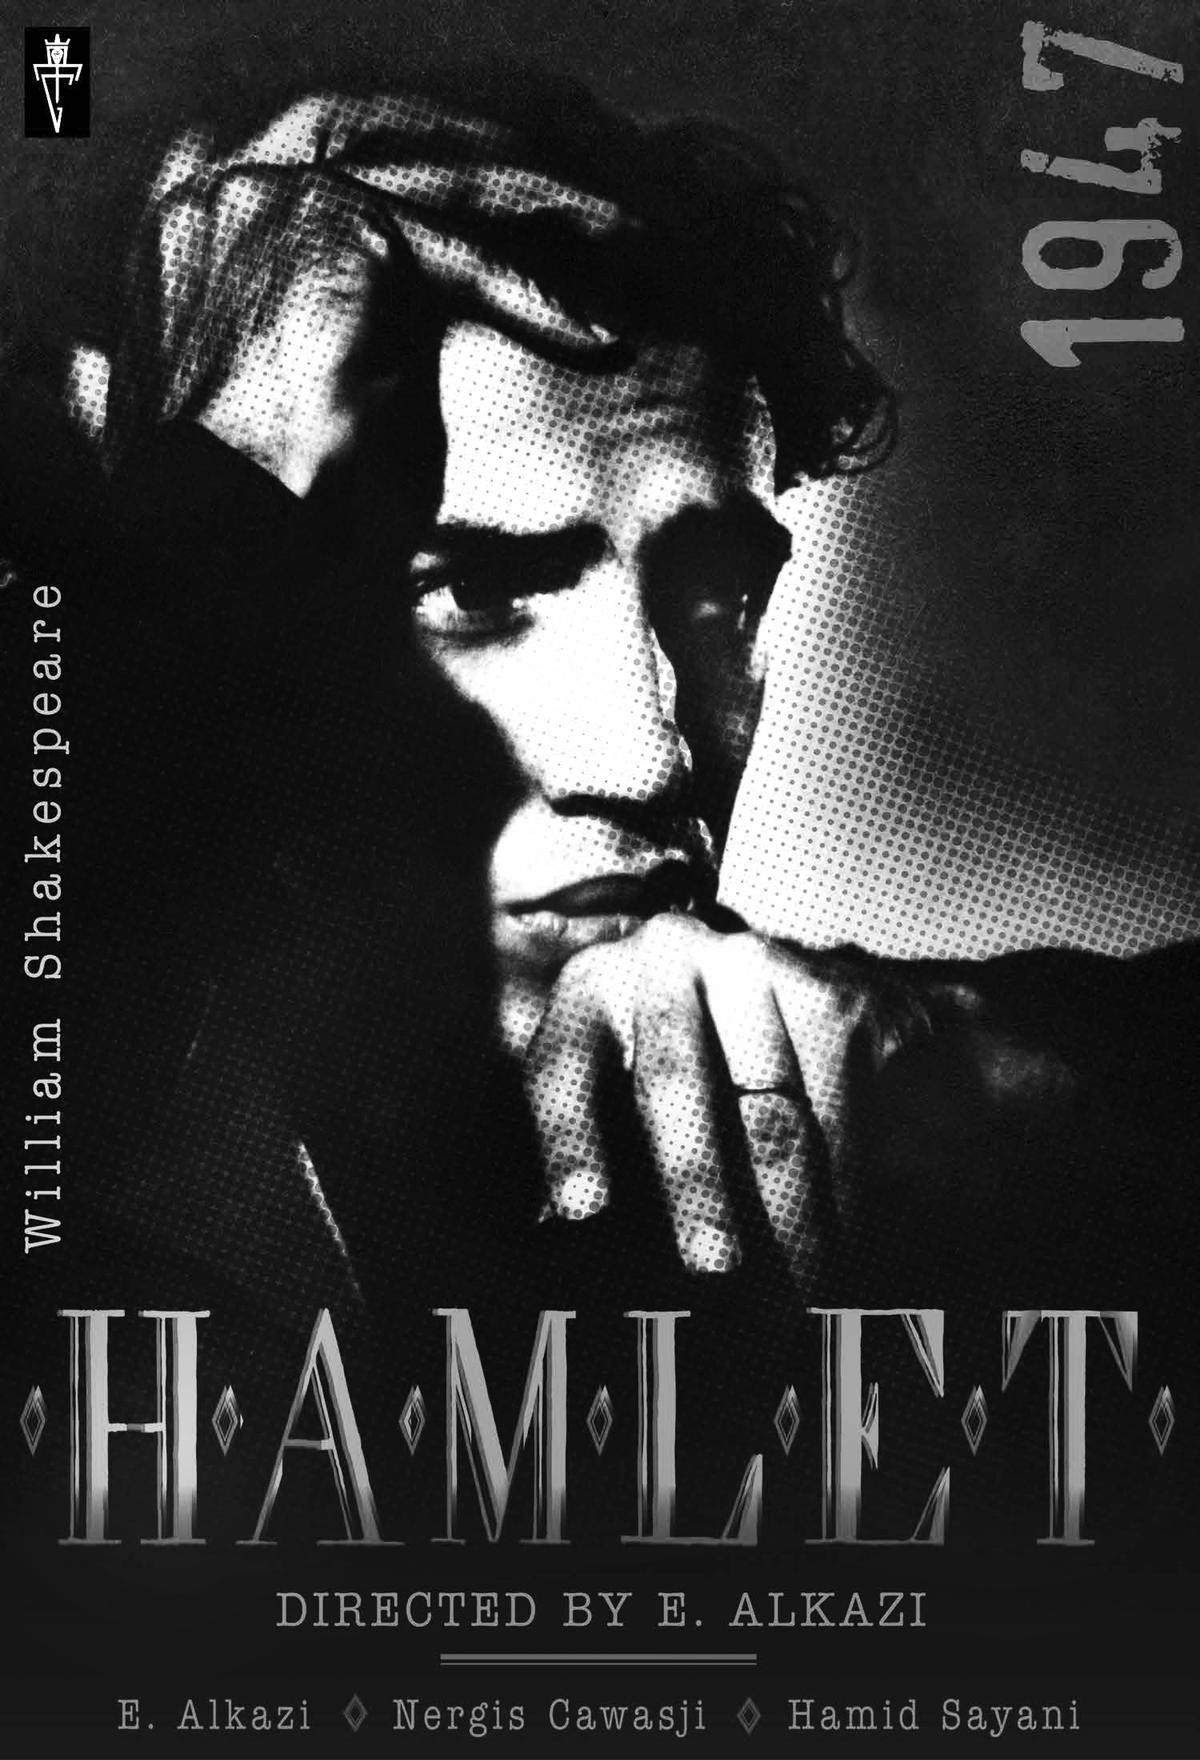 Poster of Hamlet by Shakespeare, dir. E. Alkazi; Alkazi as Hamlet, Theatre Group, Bombay, 1947
Courtesy: Alkazi Theatre Archives